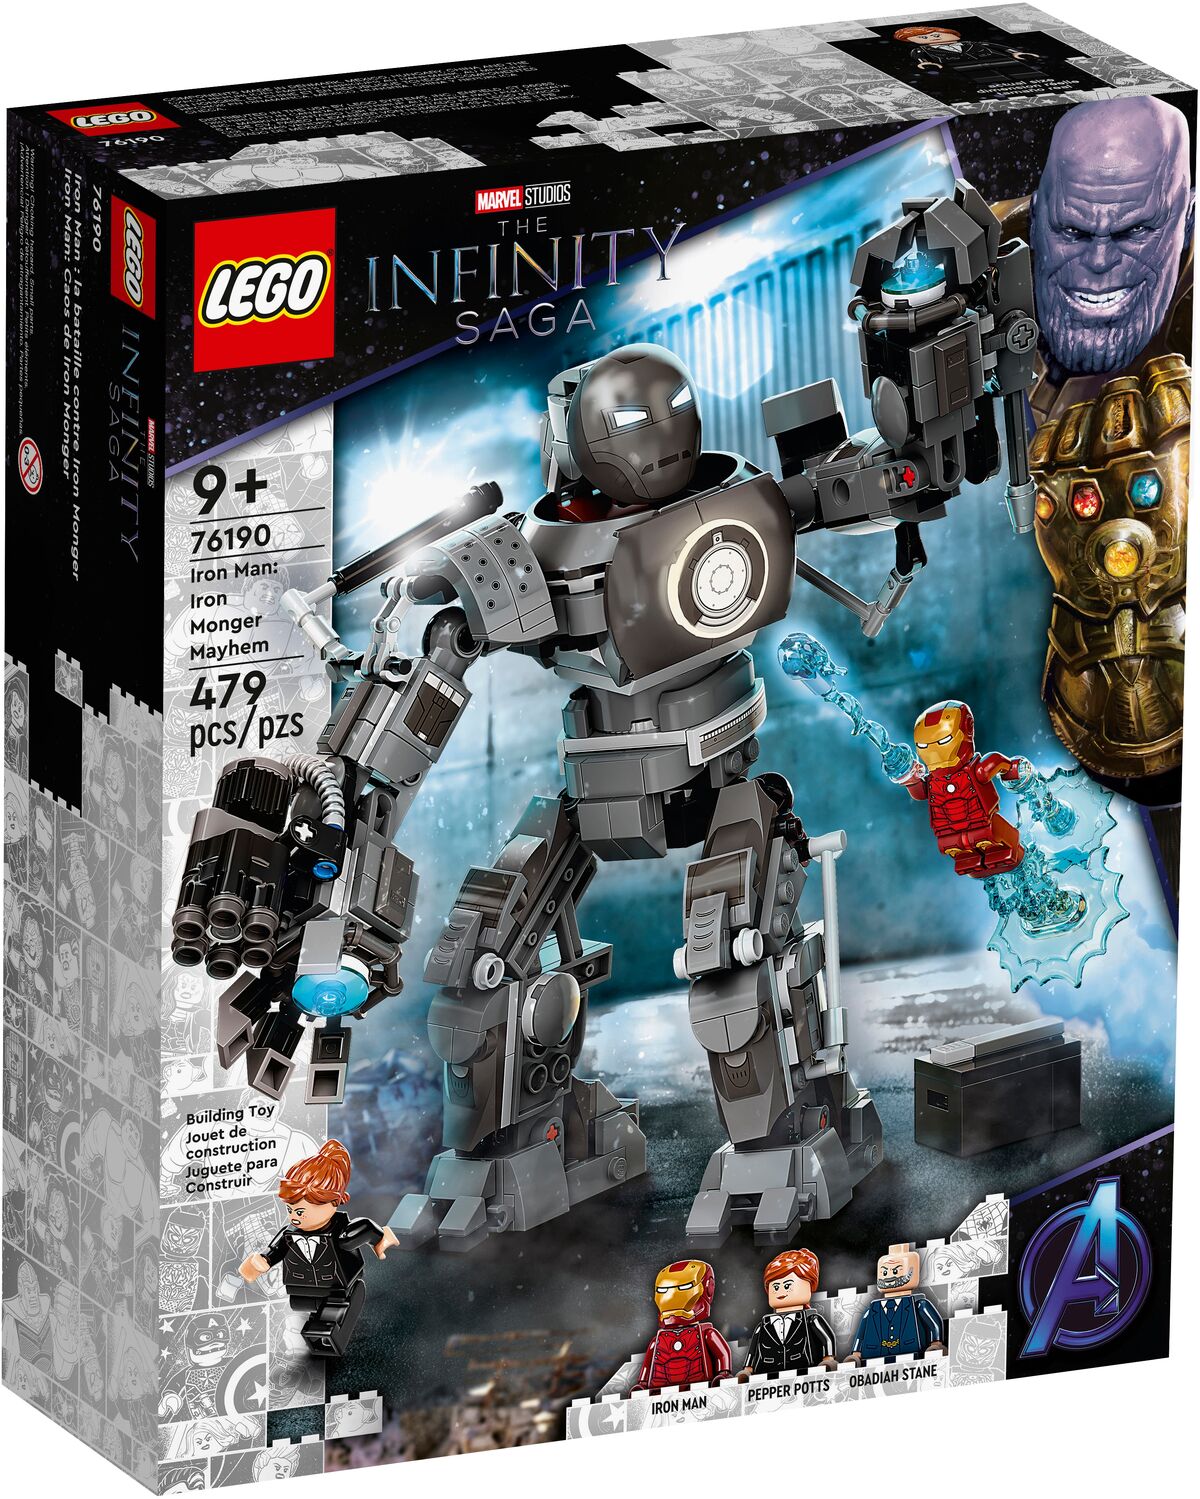 LEGO Marvel Avengers - Iron Man figur 9+